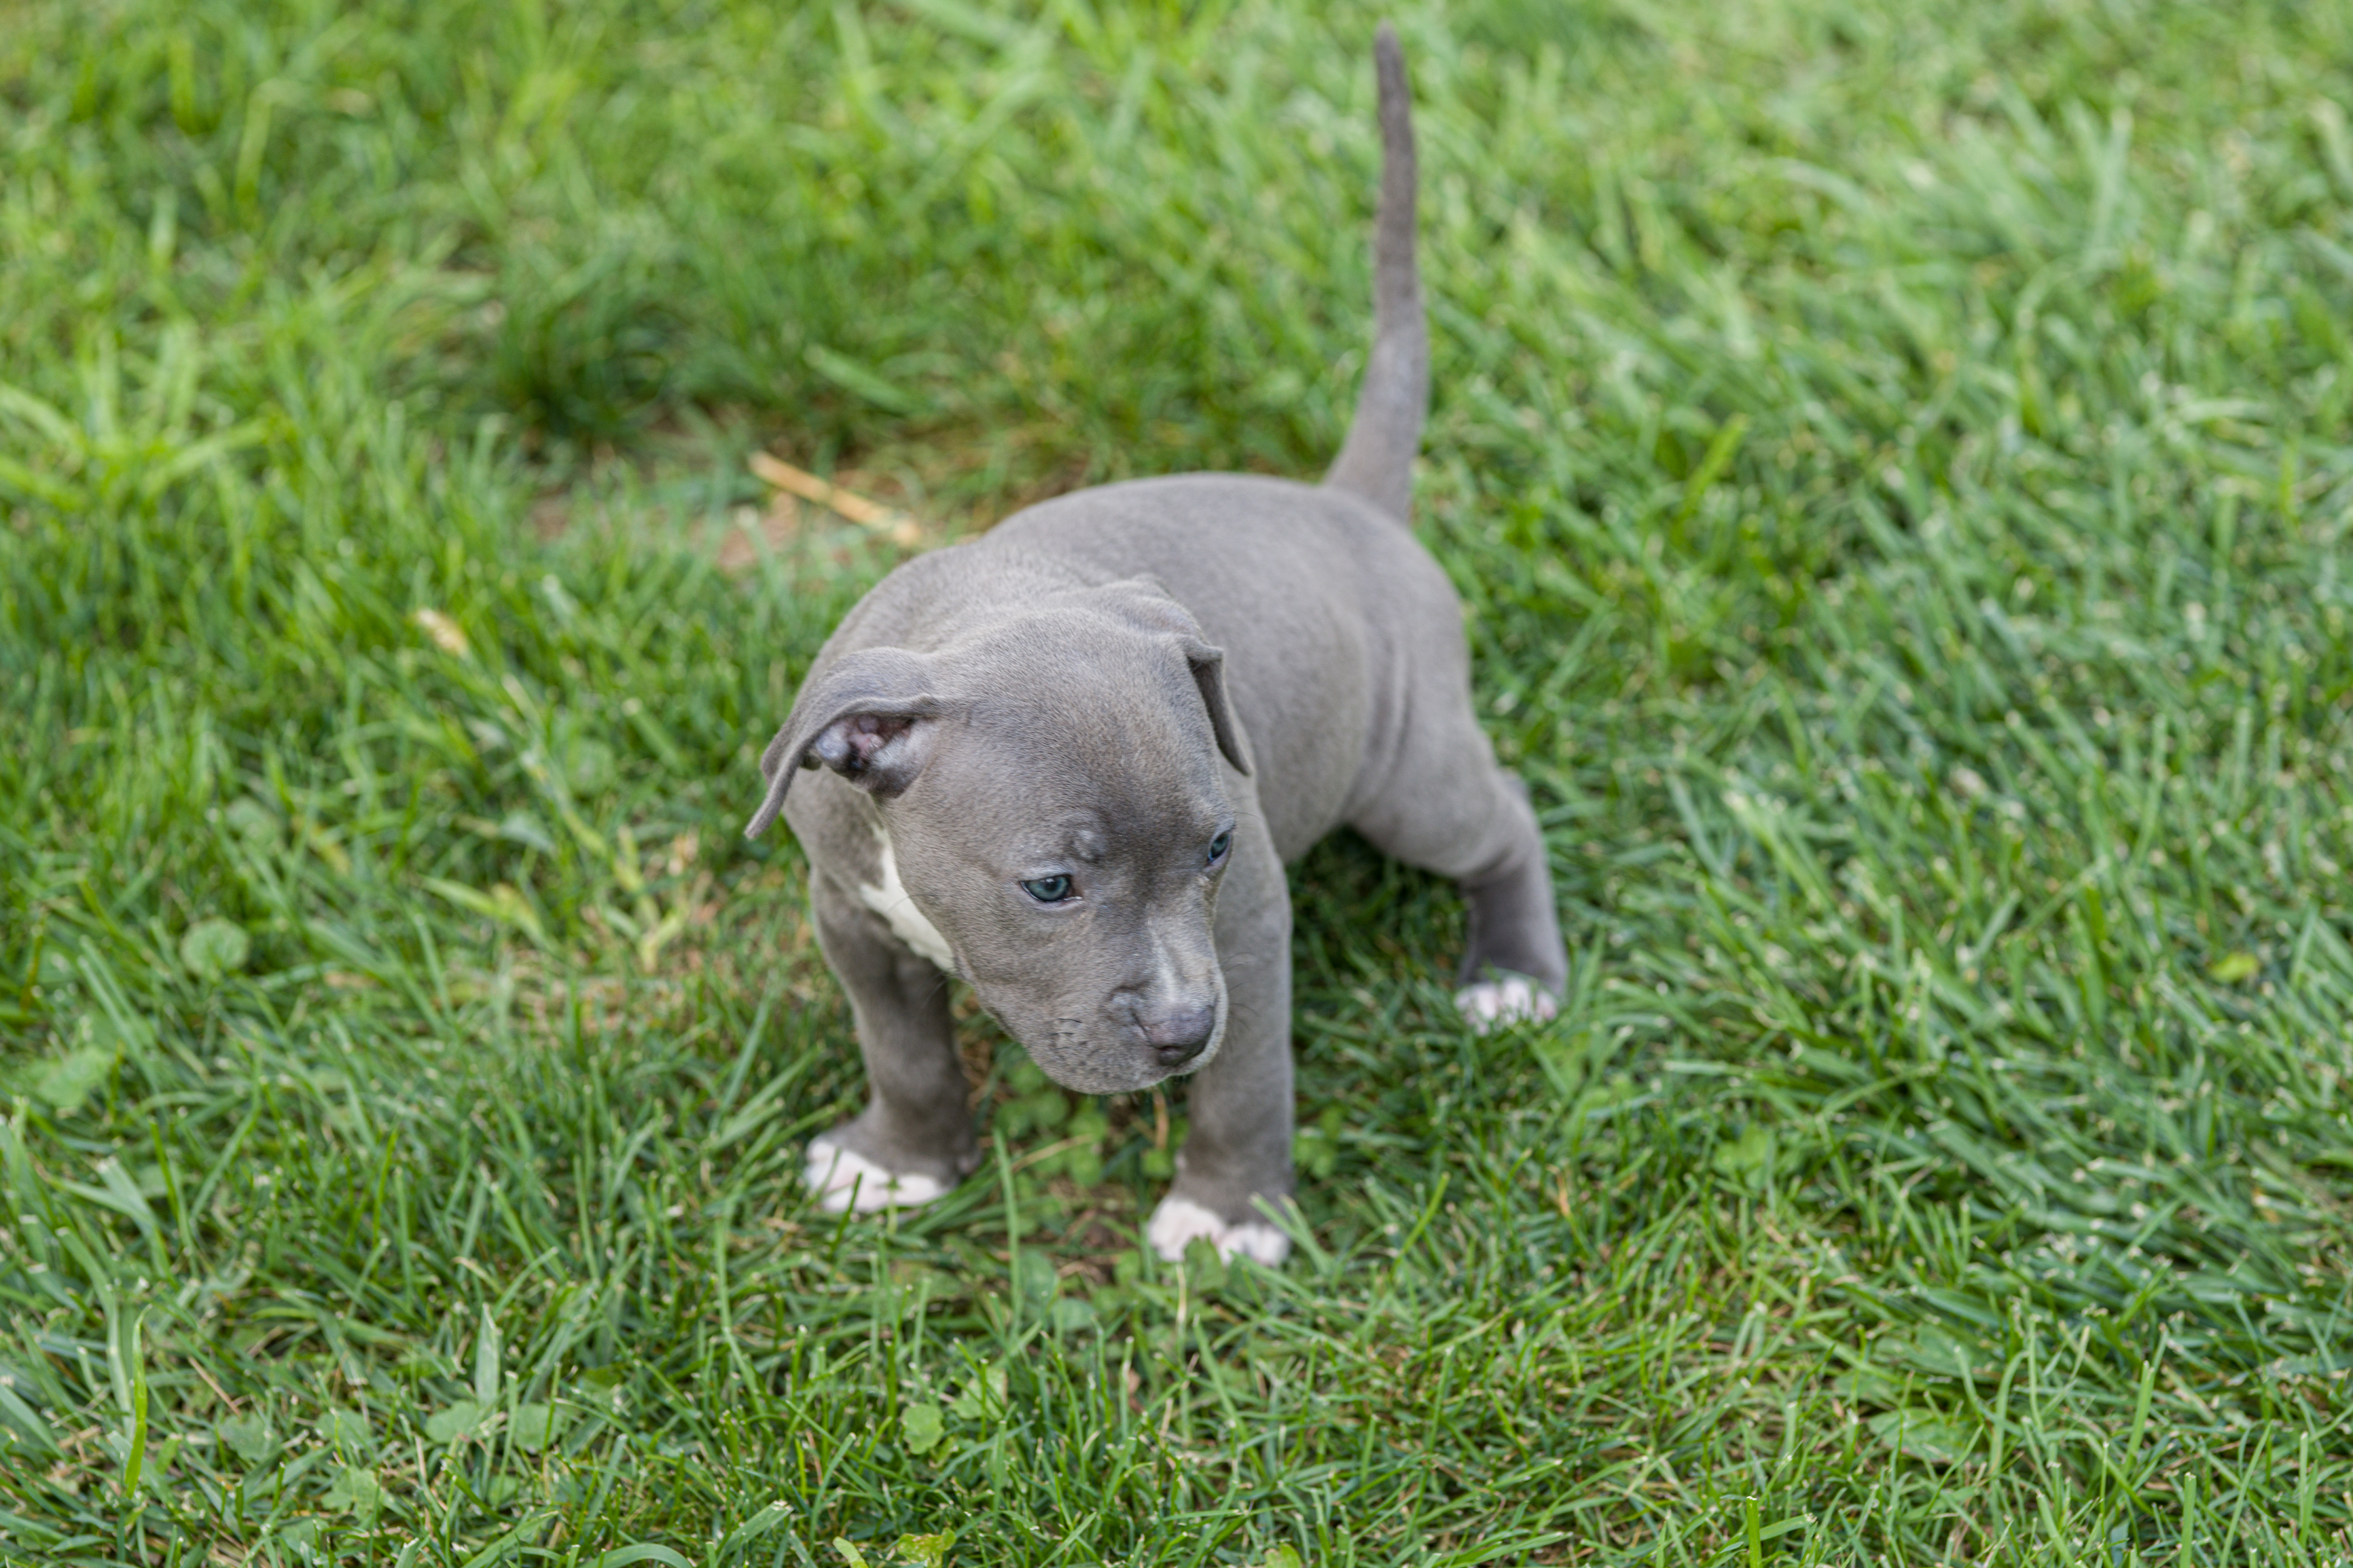 grey puppy standing in grass